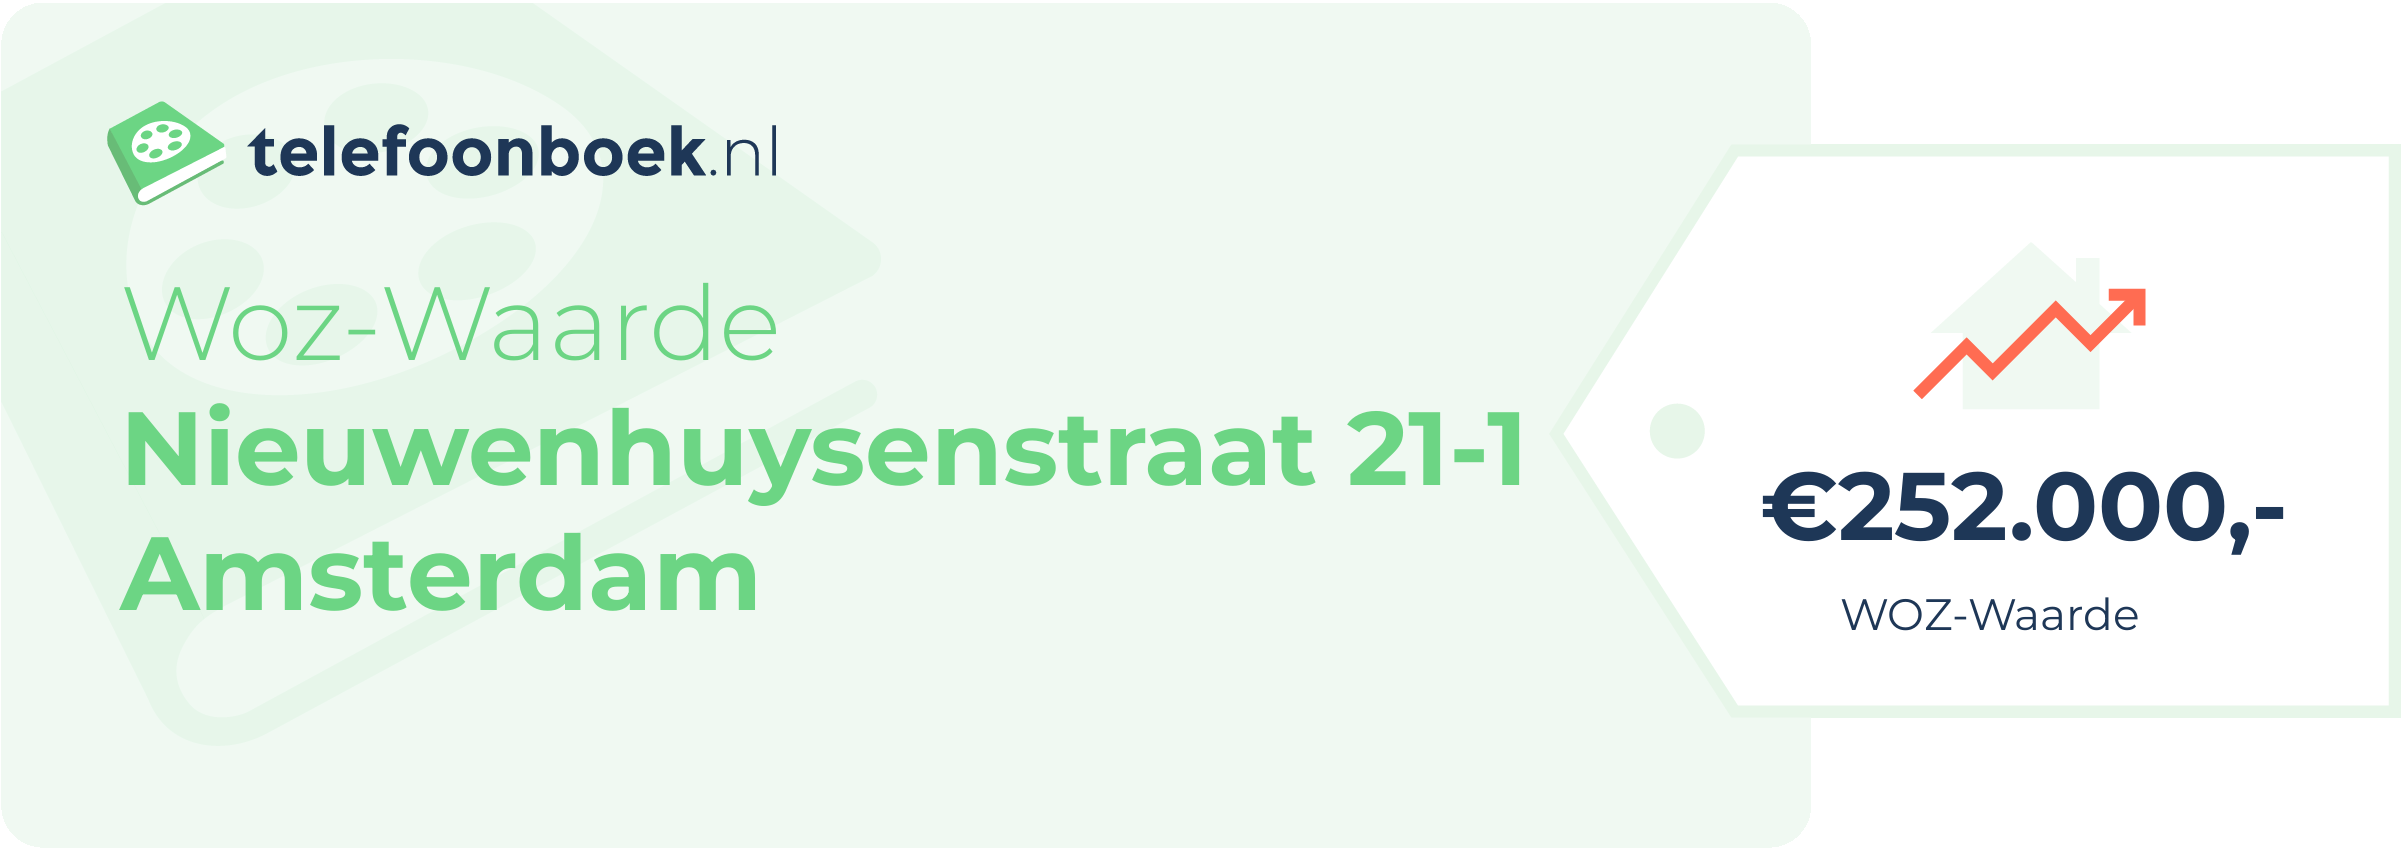 WOZ-waarde Nieuwenhuysenstraat 21-1 Amsterdam